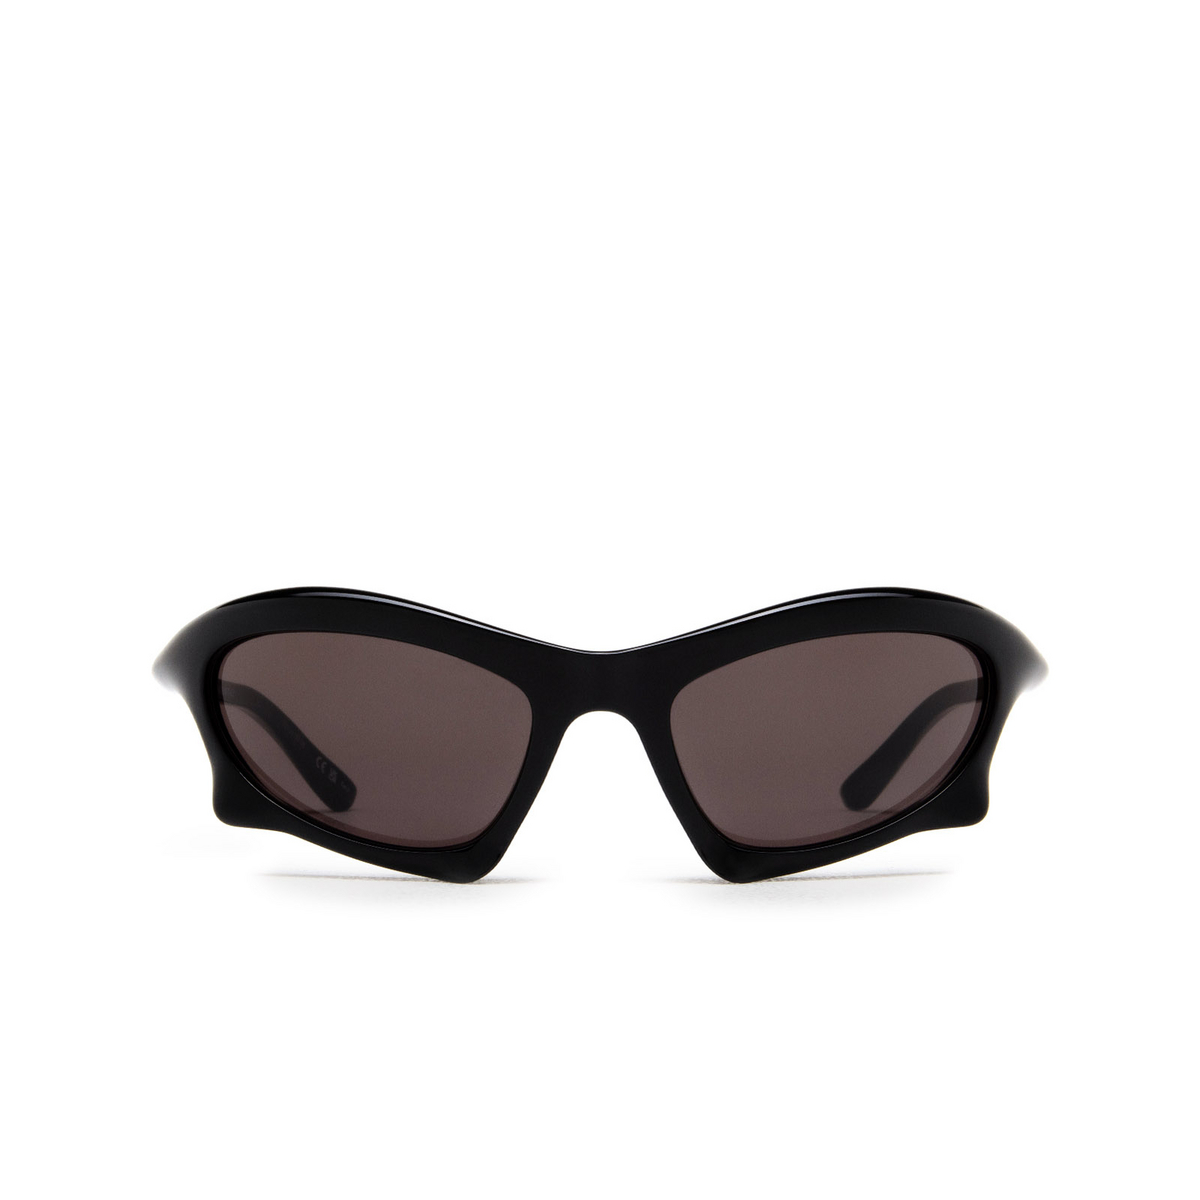 Balenciaga Bat Rectangle Sunglasses 001 Black - front view